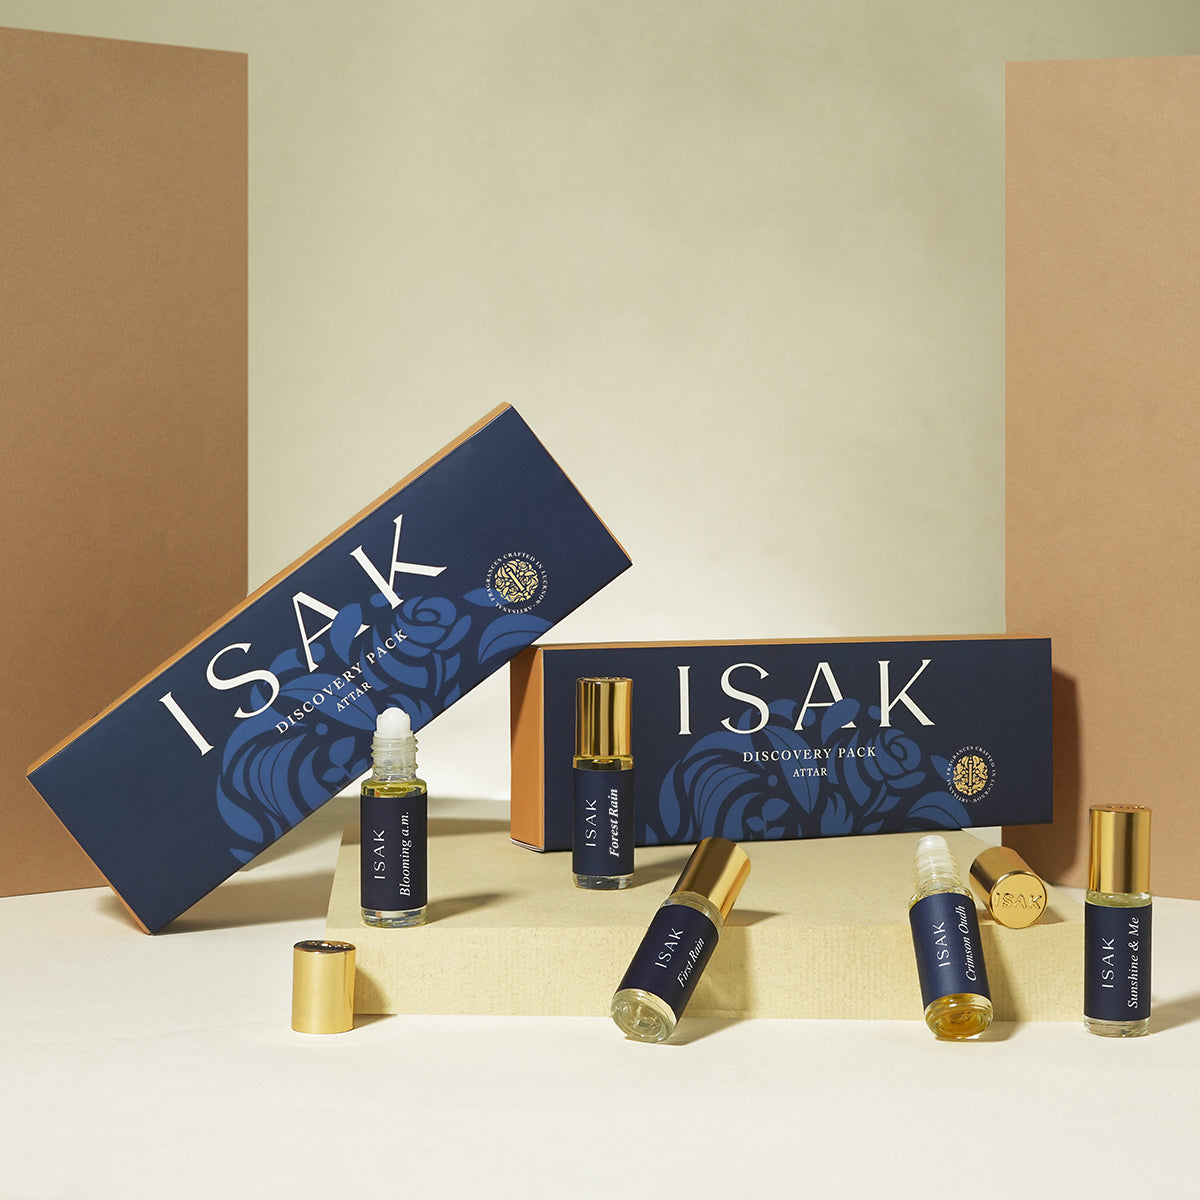 Isak Discovery Pack of attars, long lasting royal fragrances